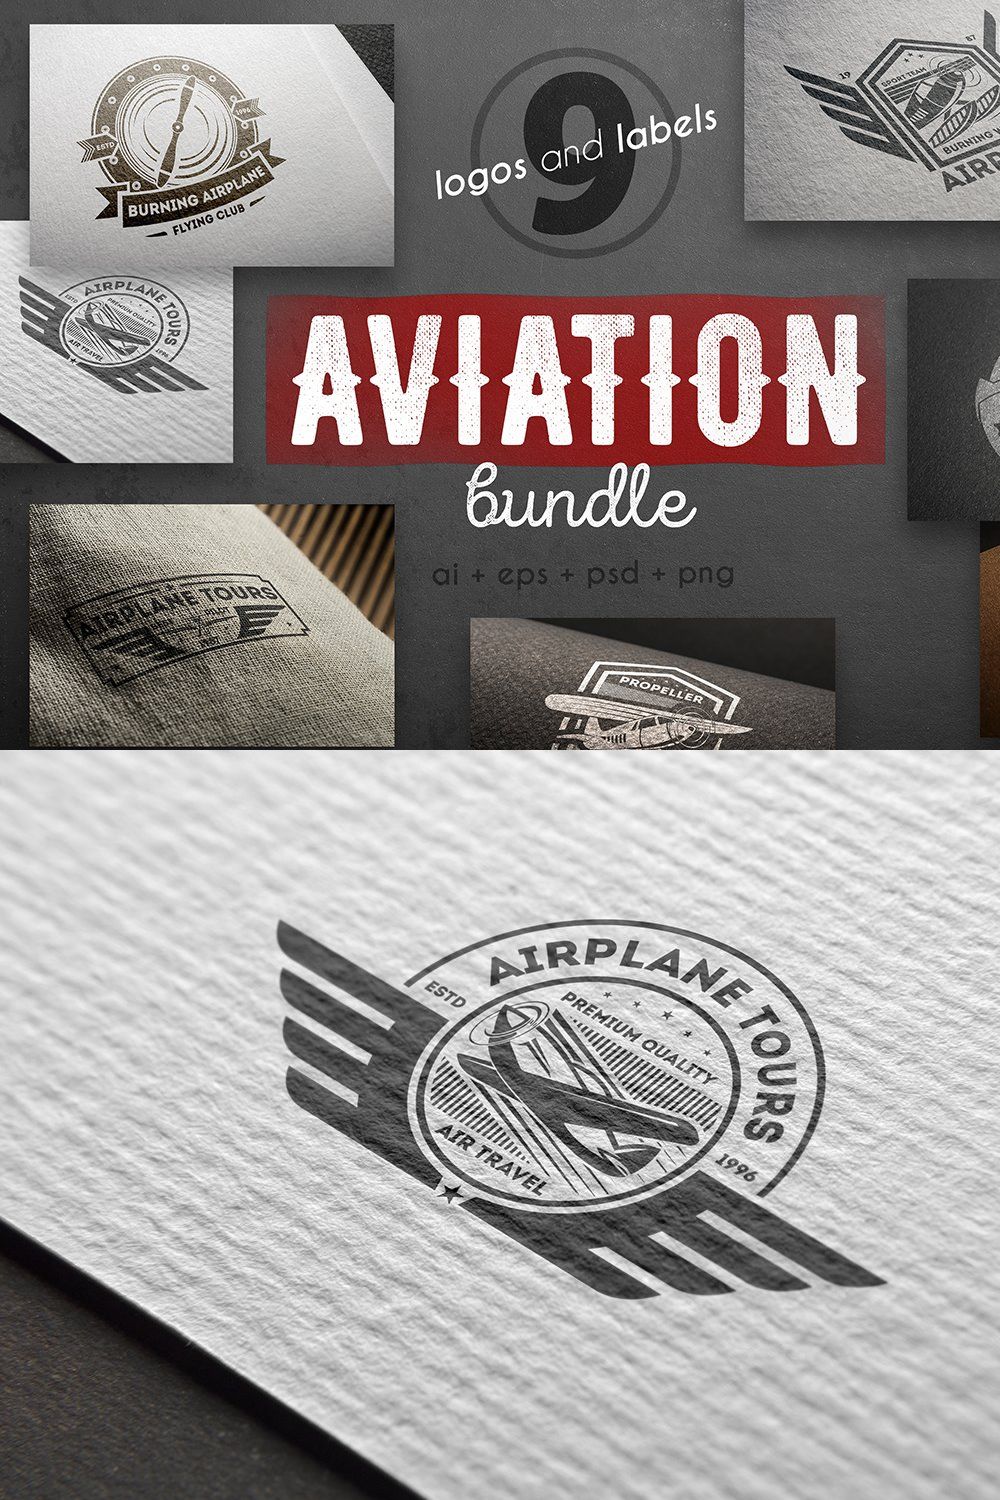 Aviation logo kit pinterest preview image.